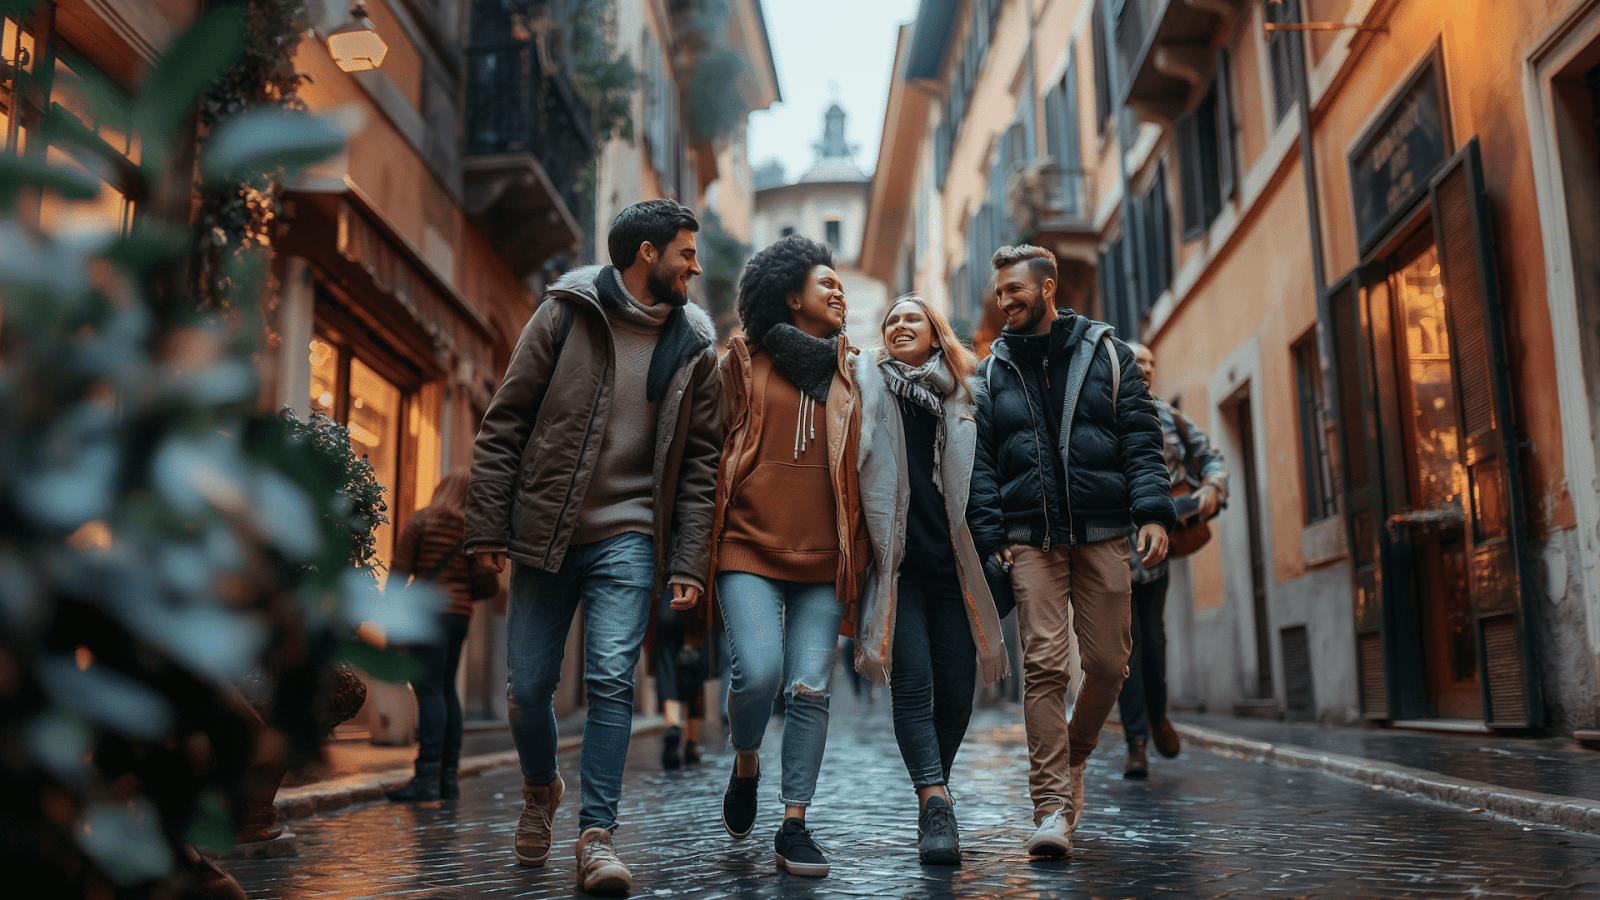 Friends strolling Rome's streets